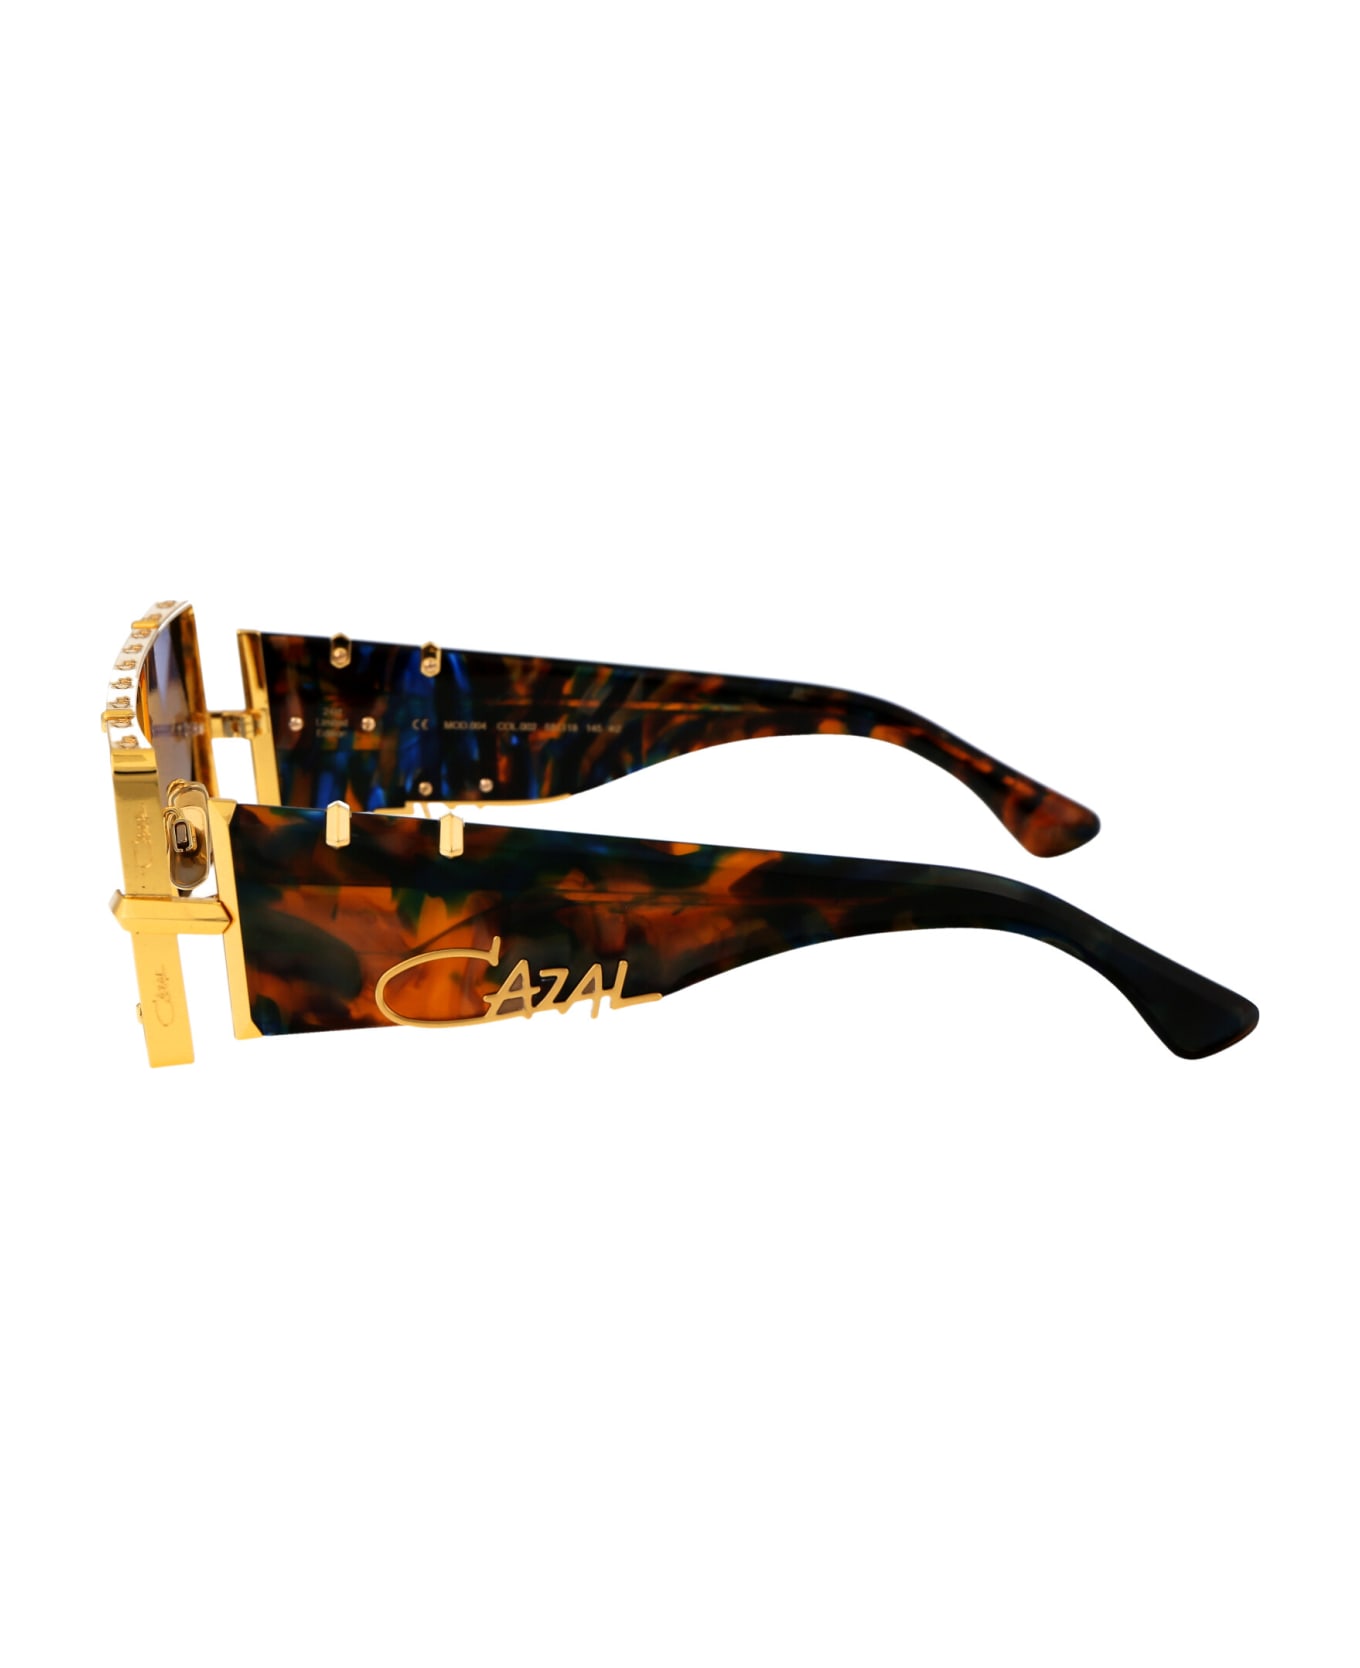 Cazal Mod. 004 Sunglasses - 002 GOLD HAVANA